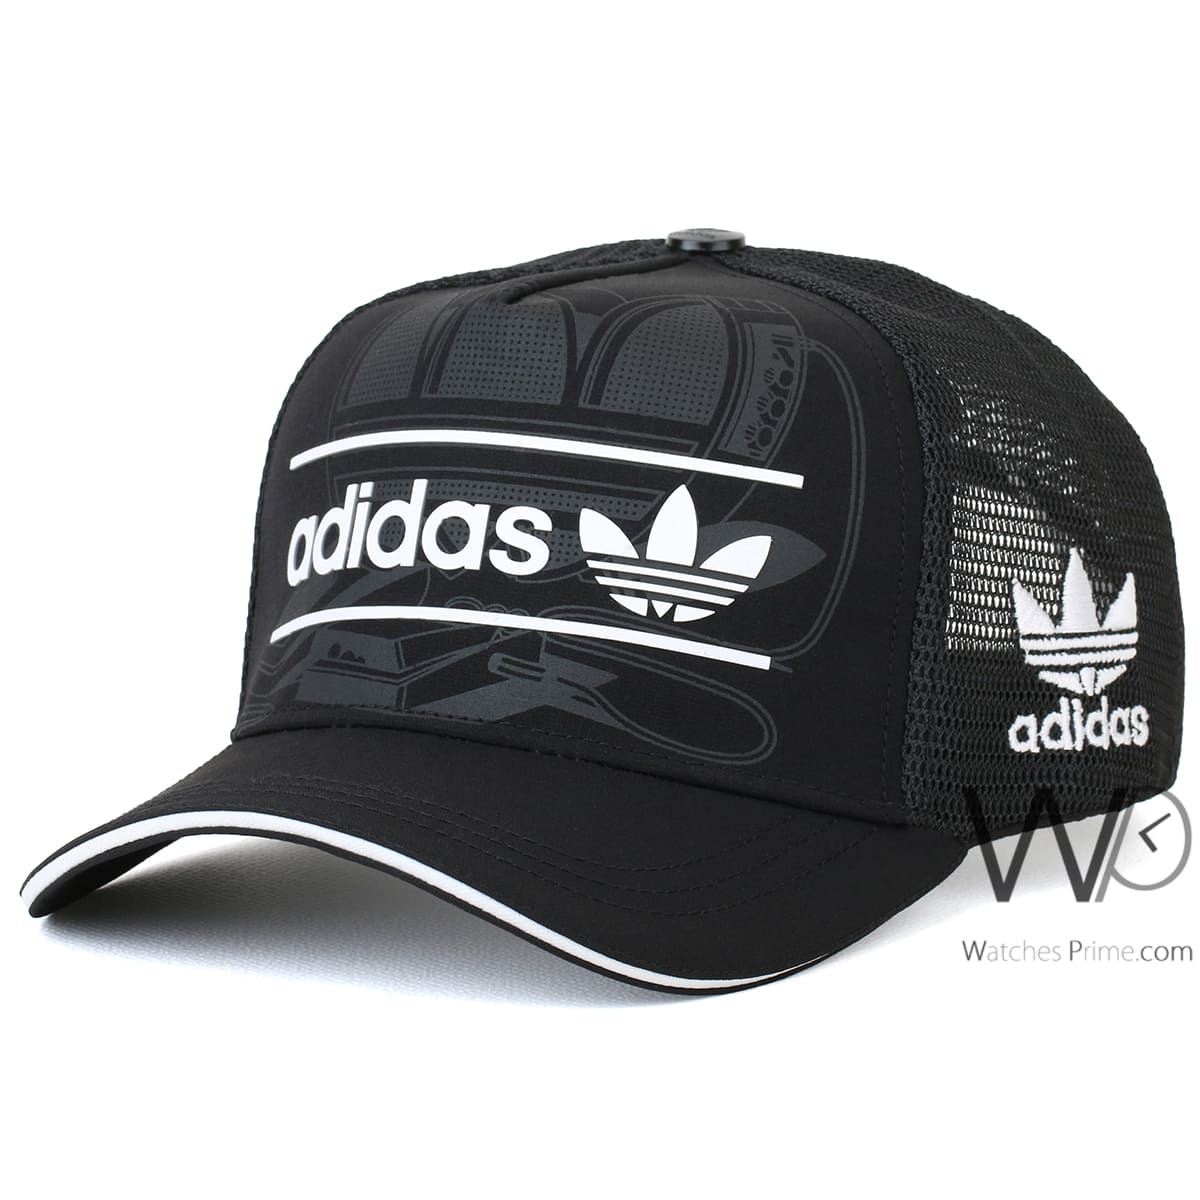 adidas-trucker-black-cap-net-men-hat